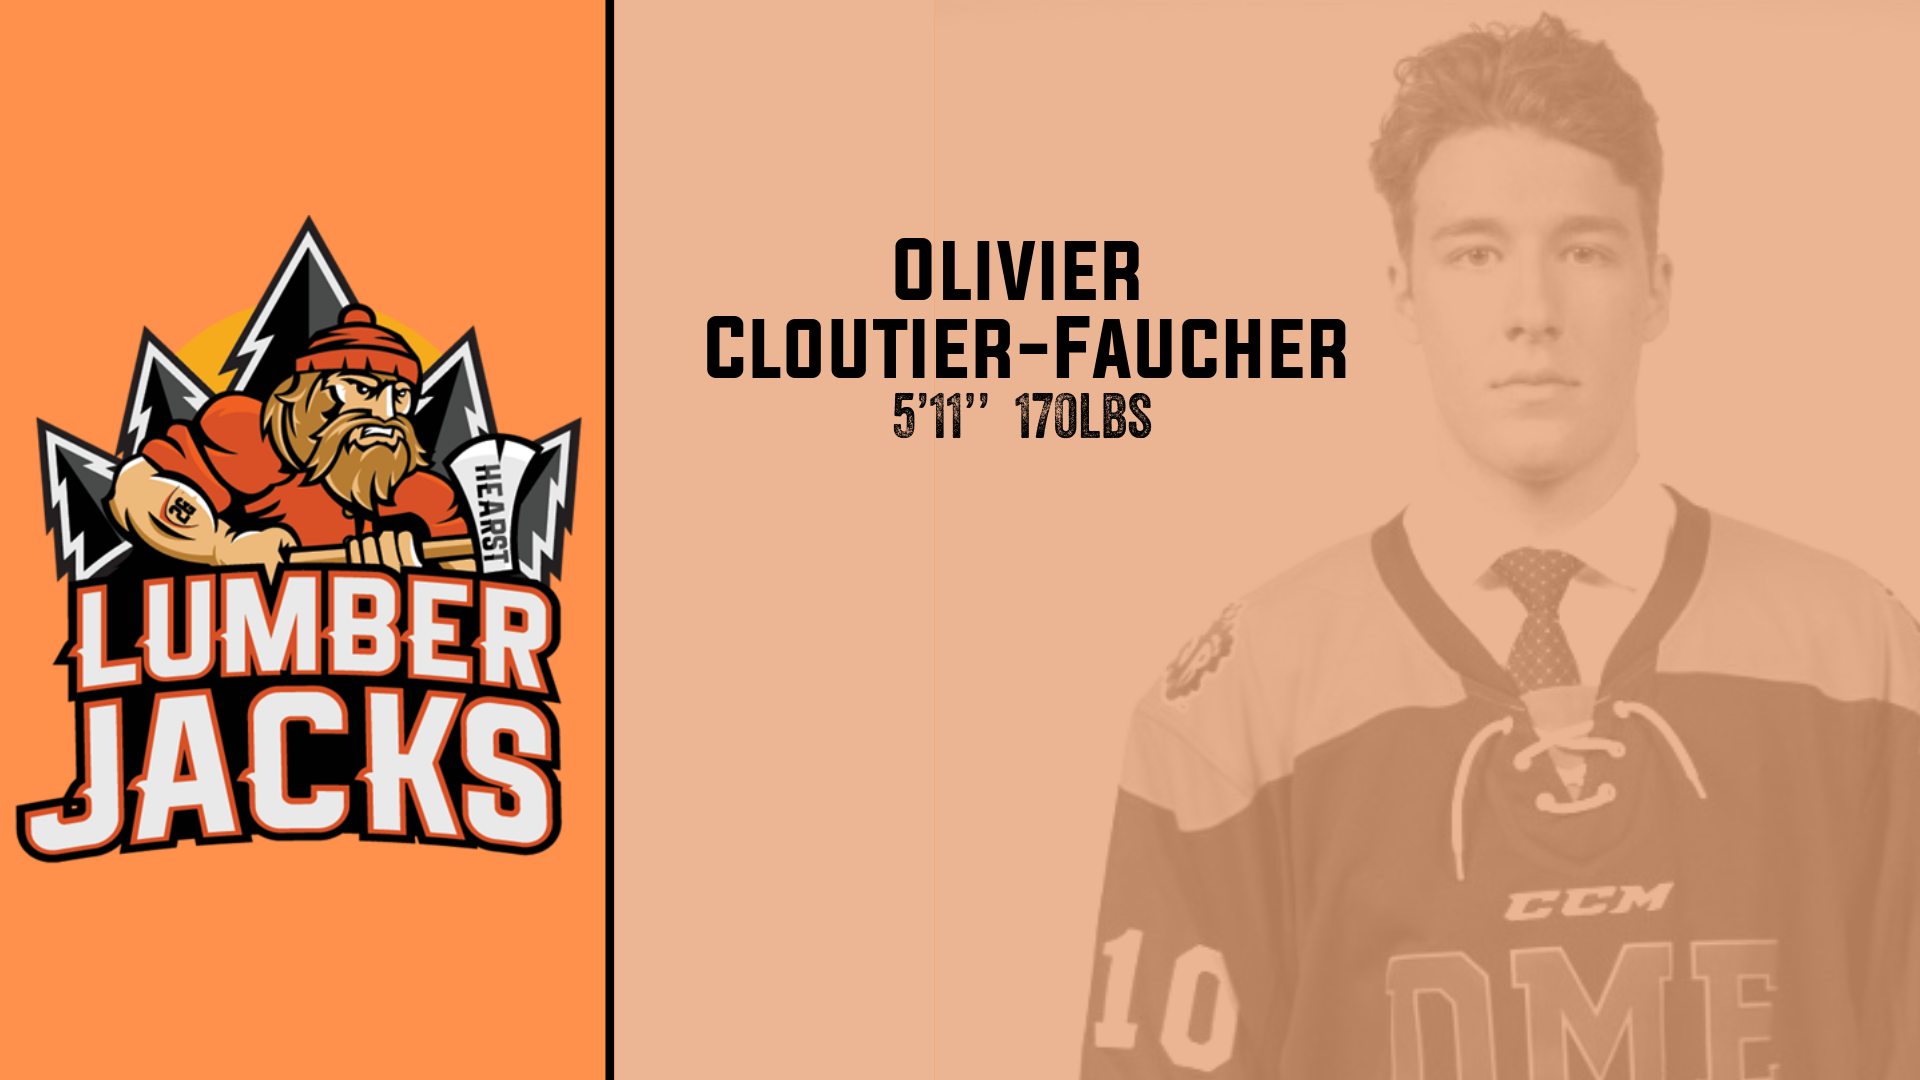 Olivier Cloutier-Faucher